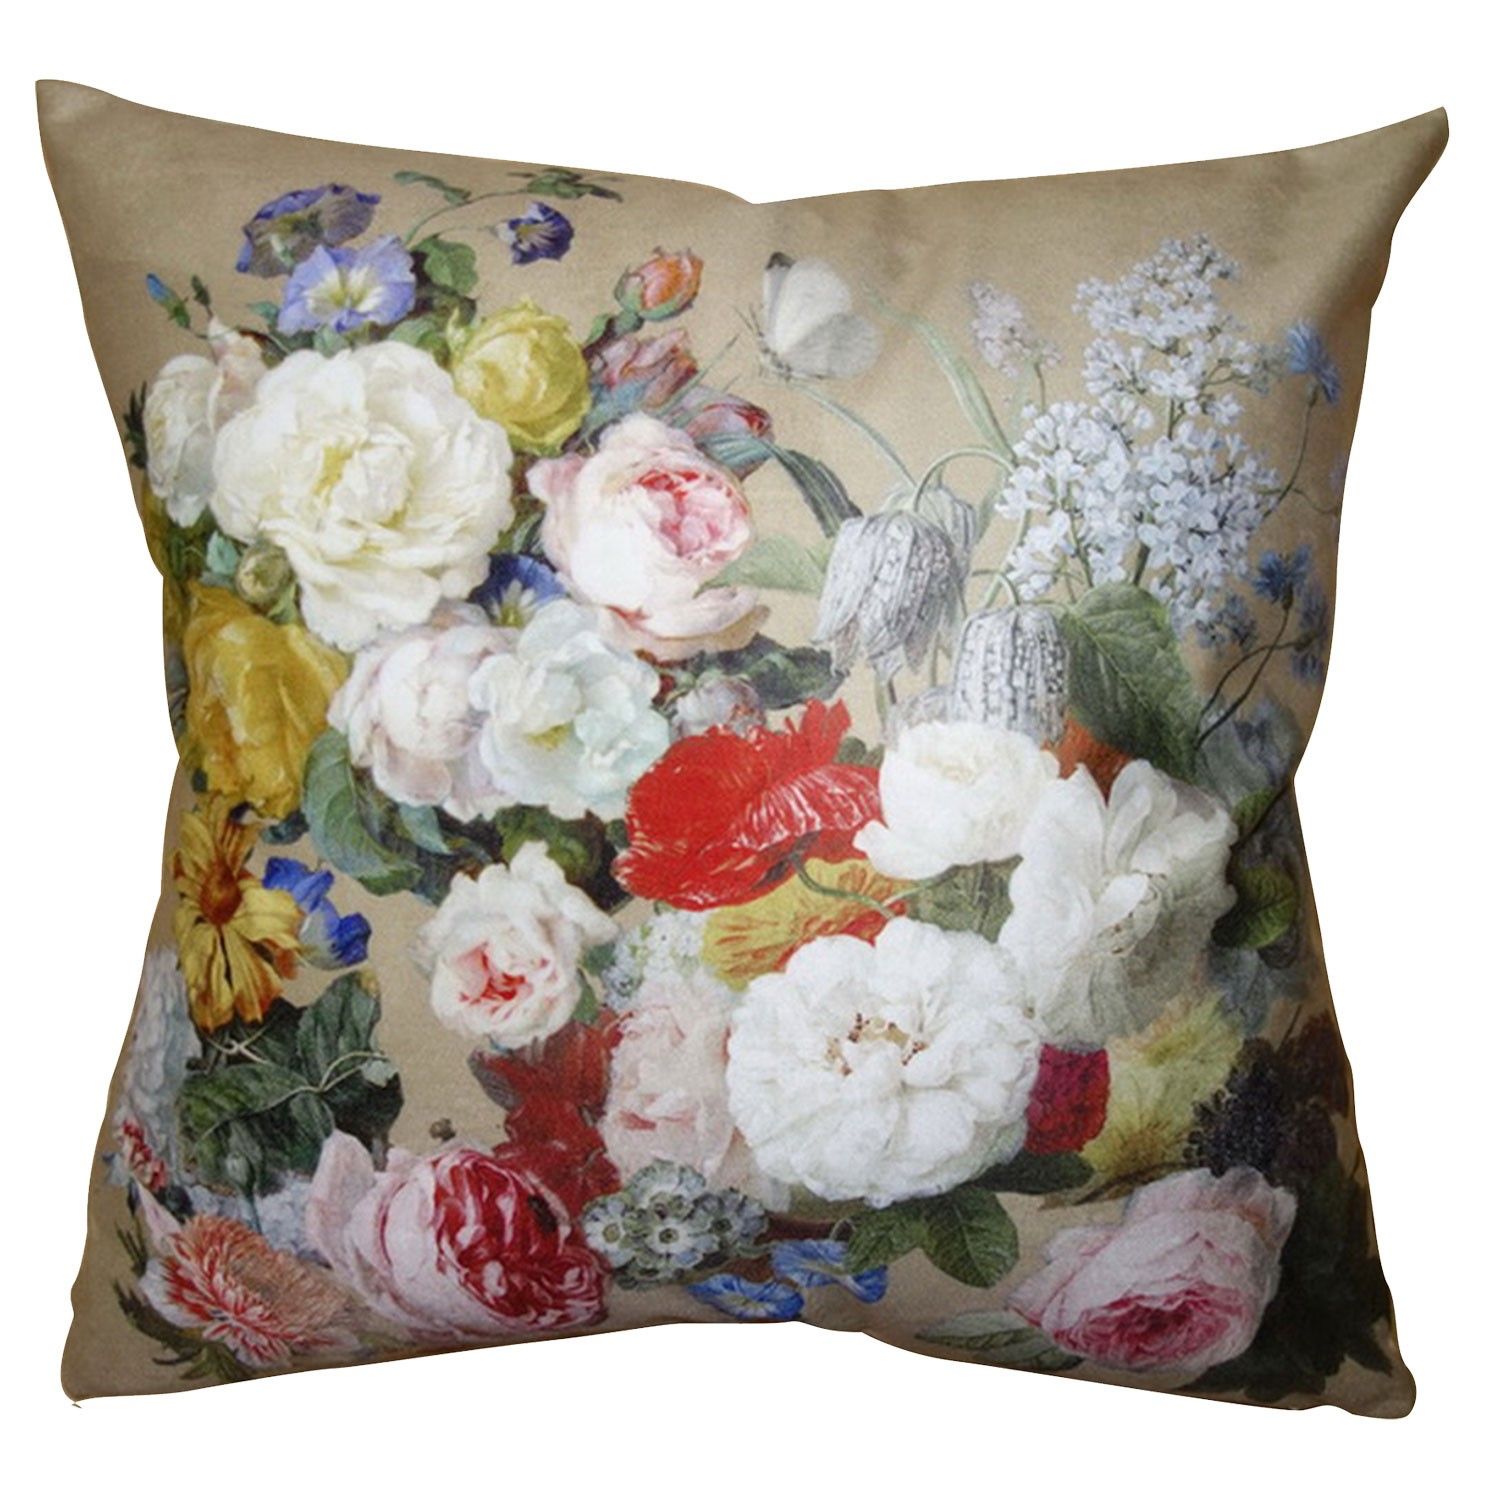 Povlak na polštář s květy Manon - 45*45 cm Clayre & Eef - LaHome - vintage dekorace